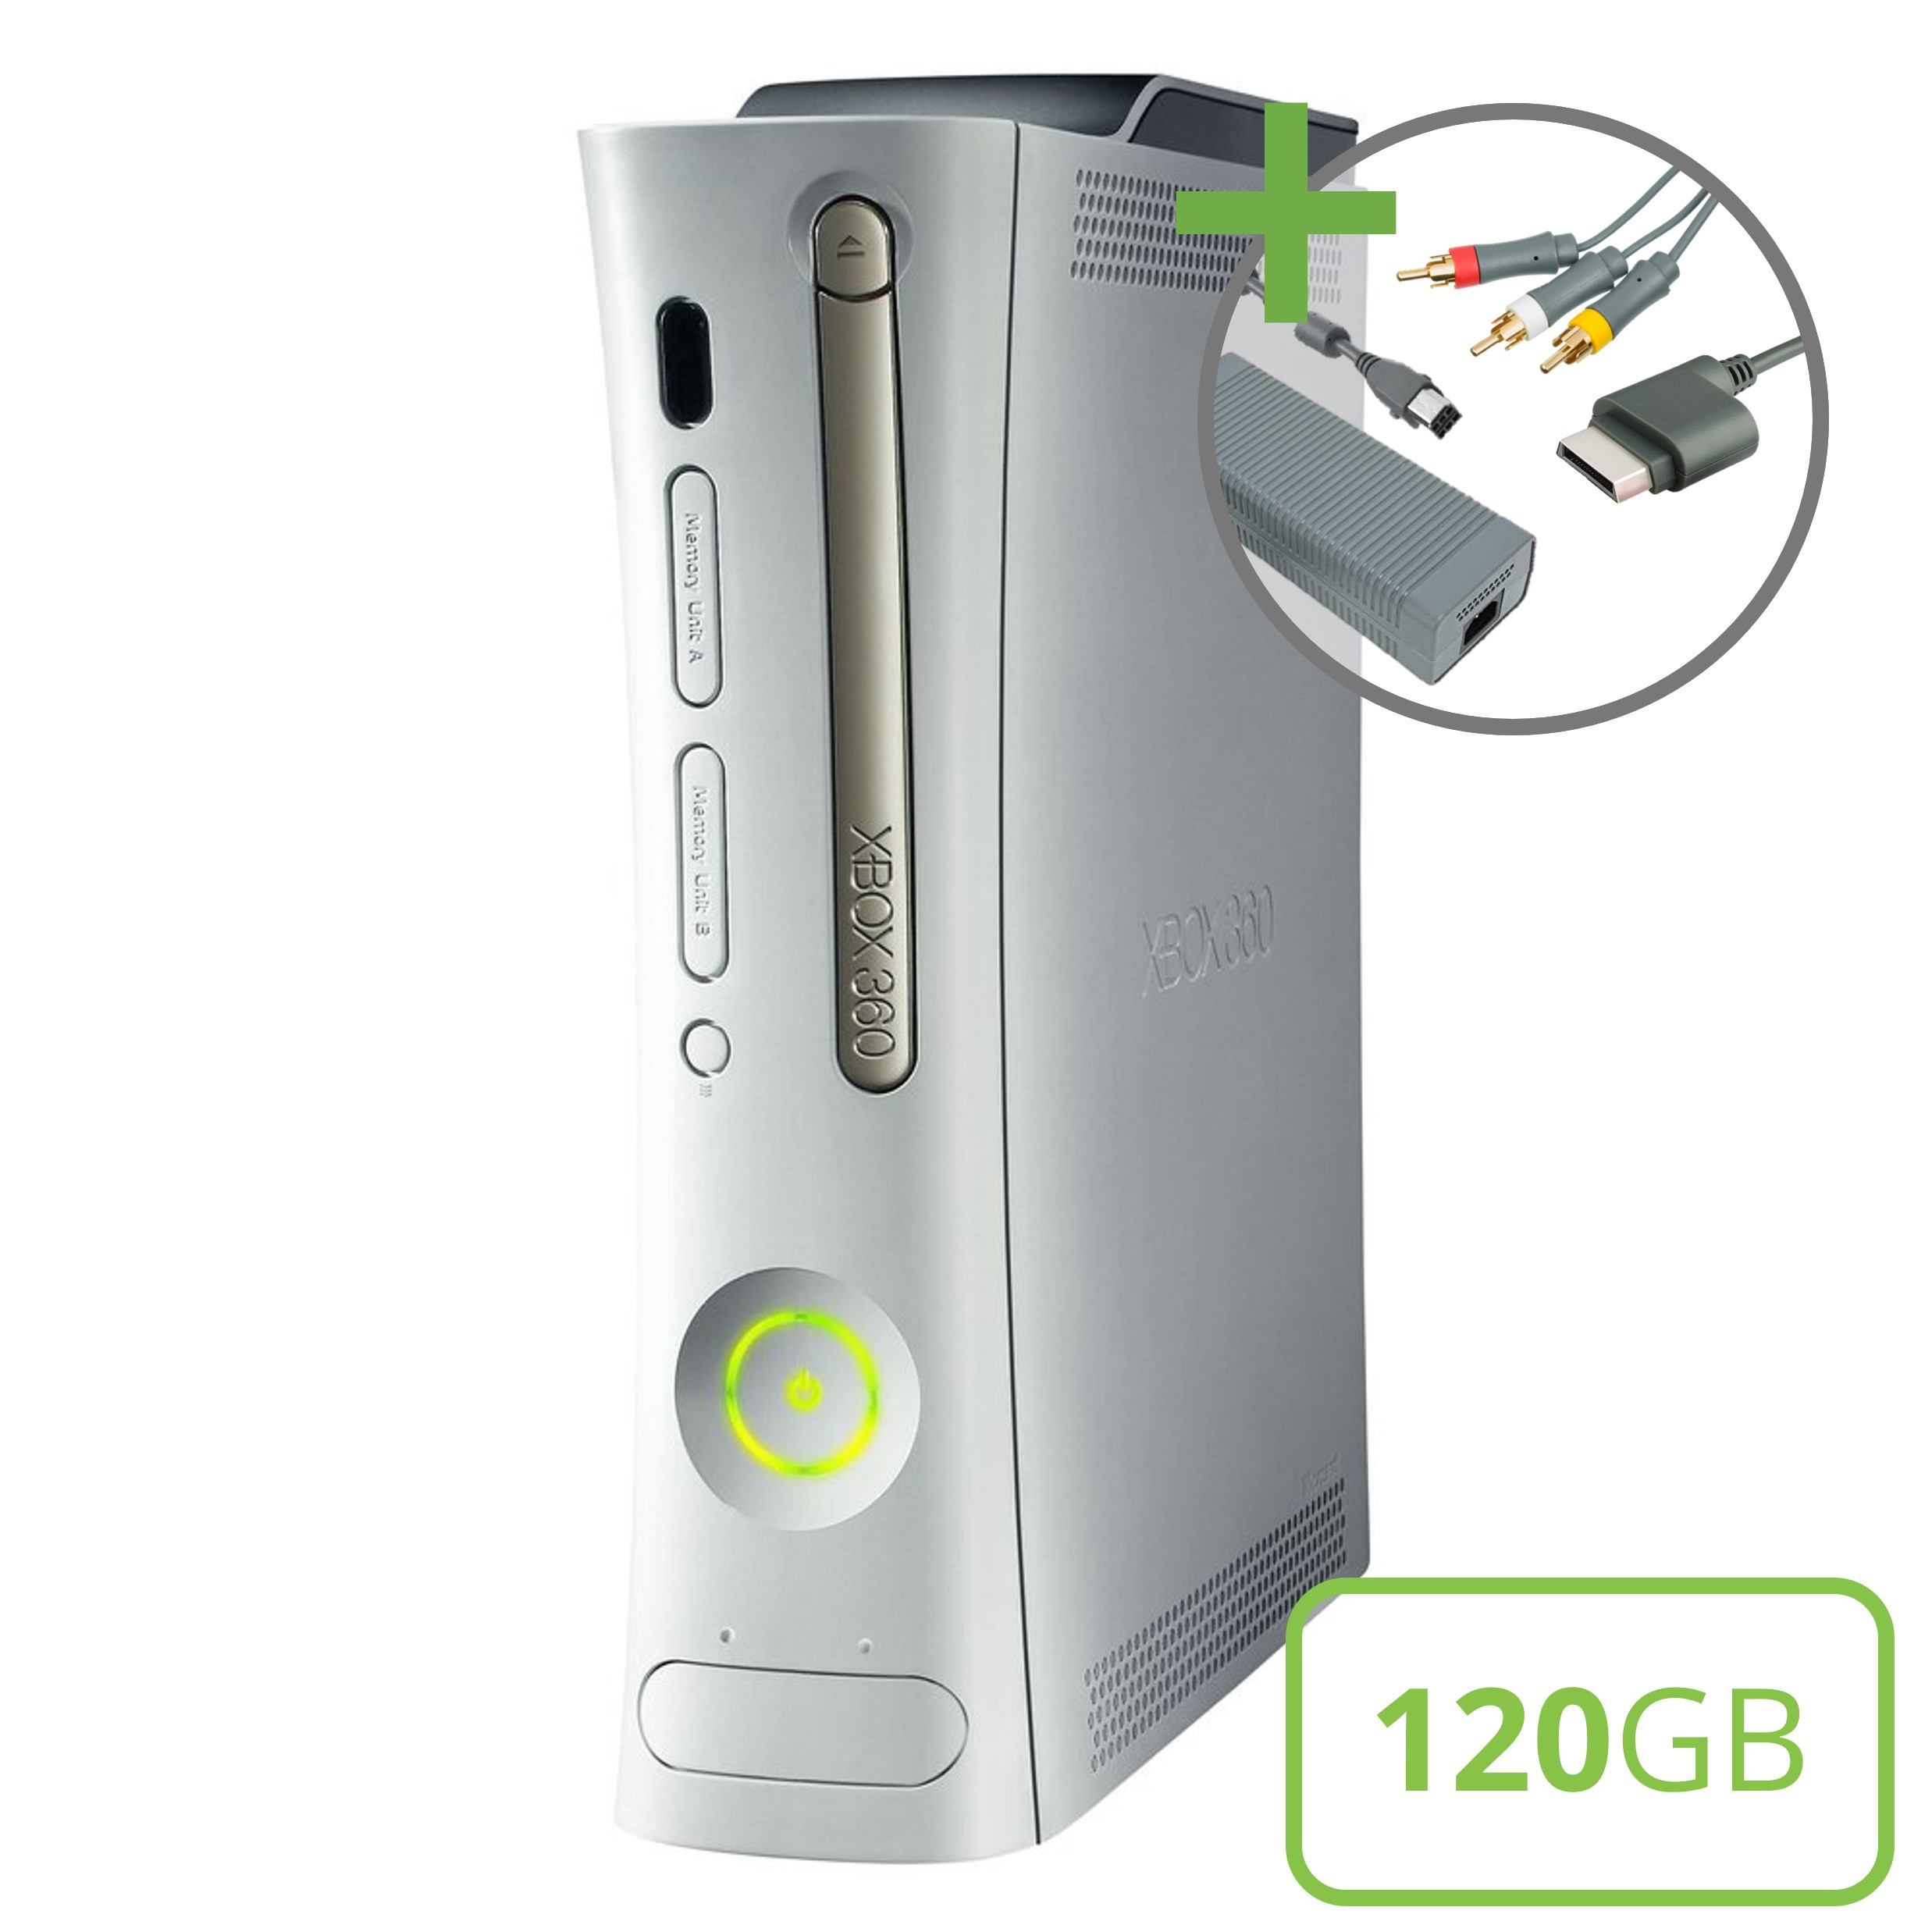 Microsoft Xbox 360 Premium Console (AV) - 120GB - Xbox 360 Hardware